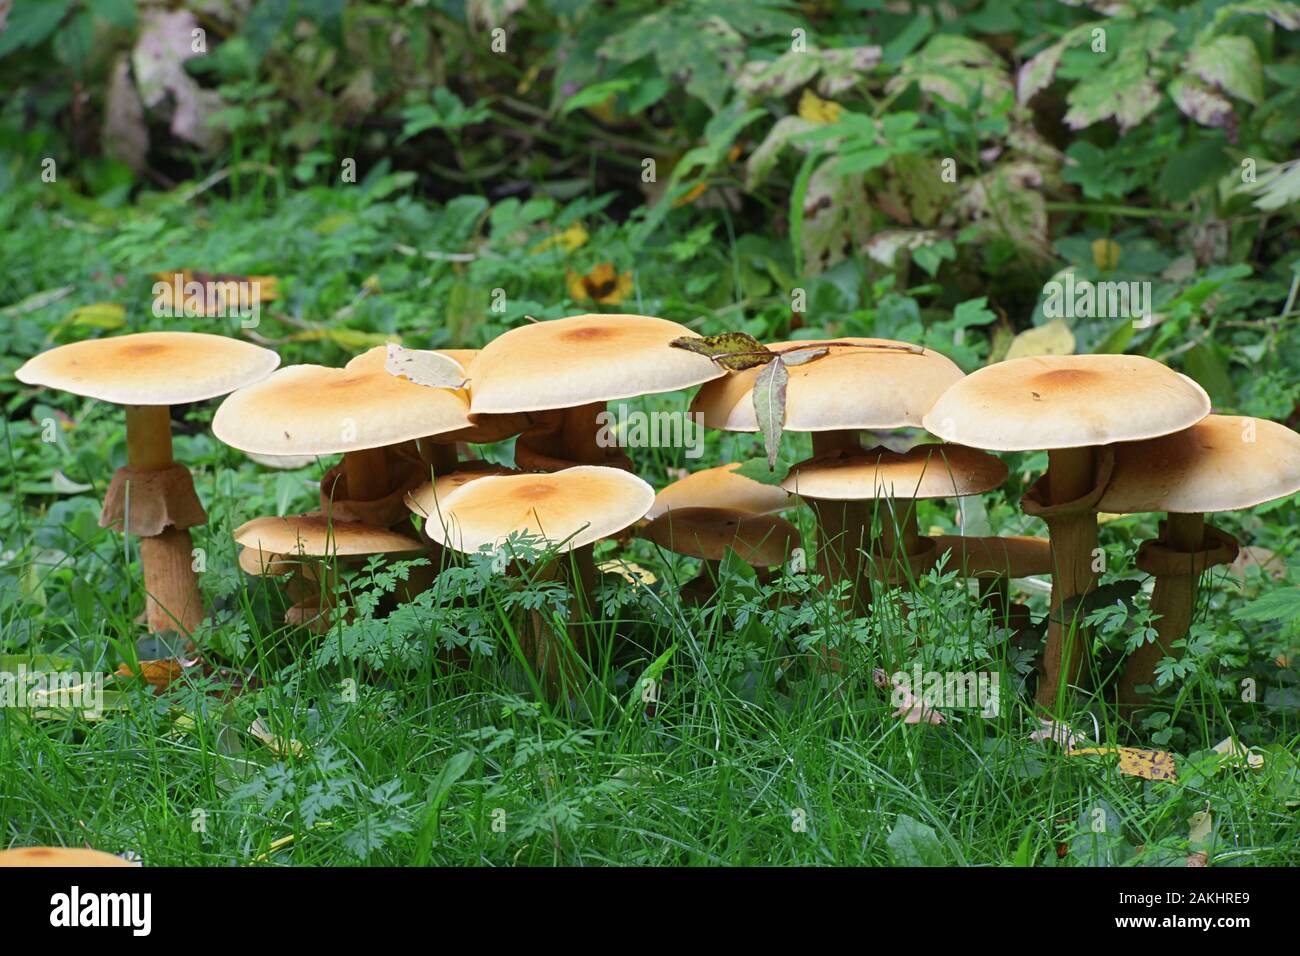 Phaeolepiota aurea, known as golden bootleg or golden cap, wild mushrooms from Finland Stock Photo